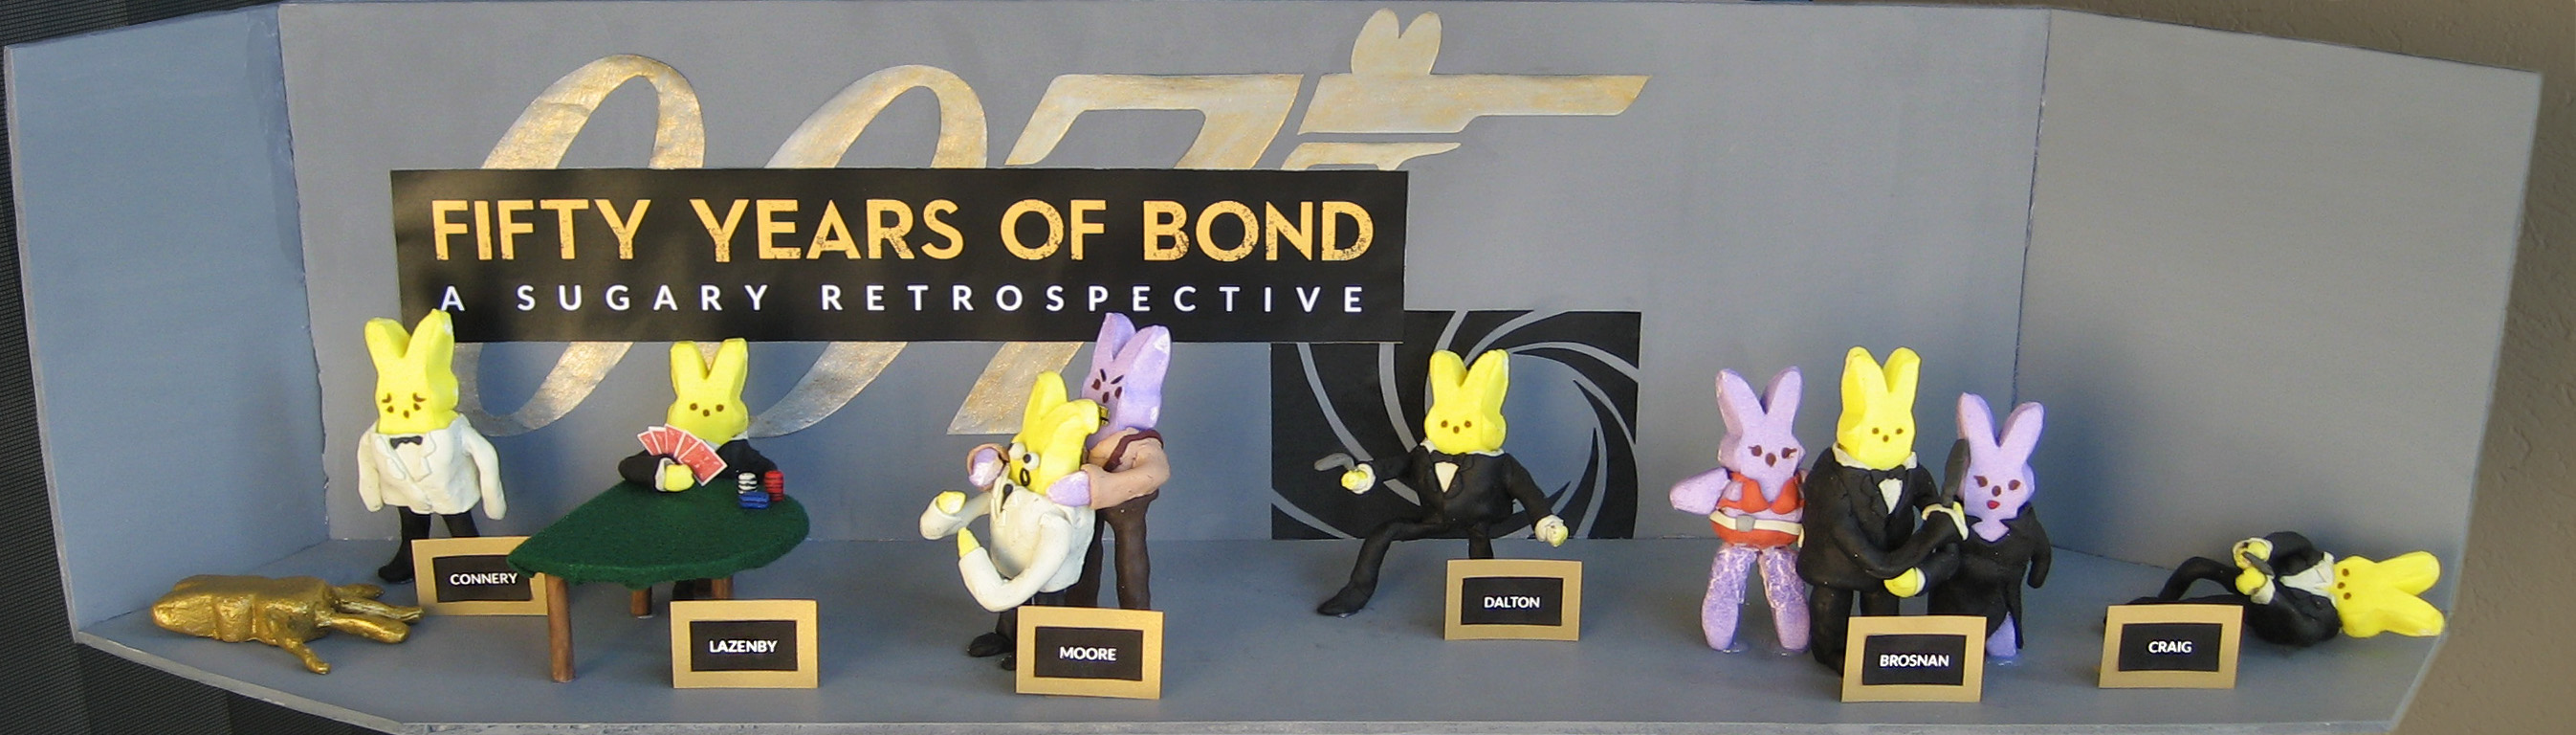 peeps diorama of James Bond